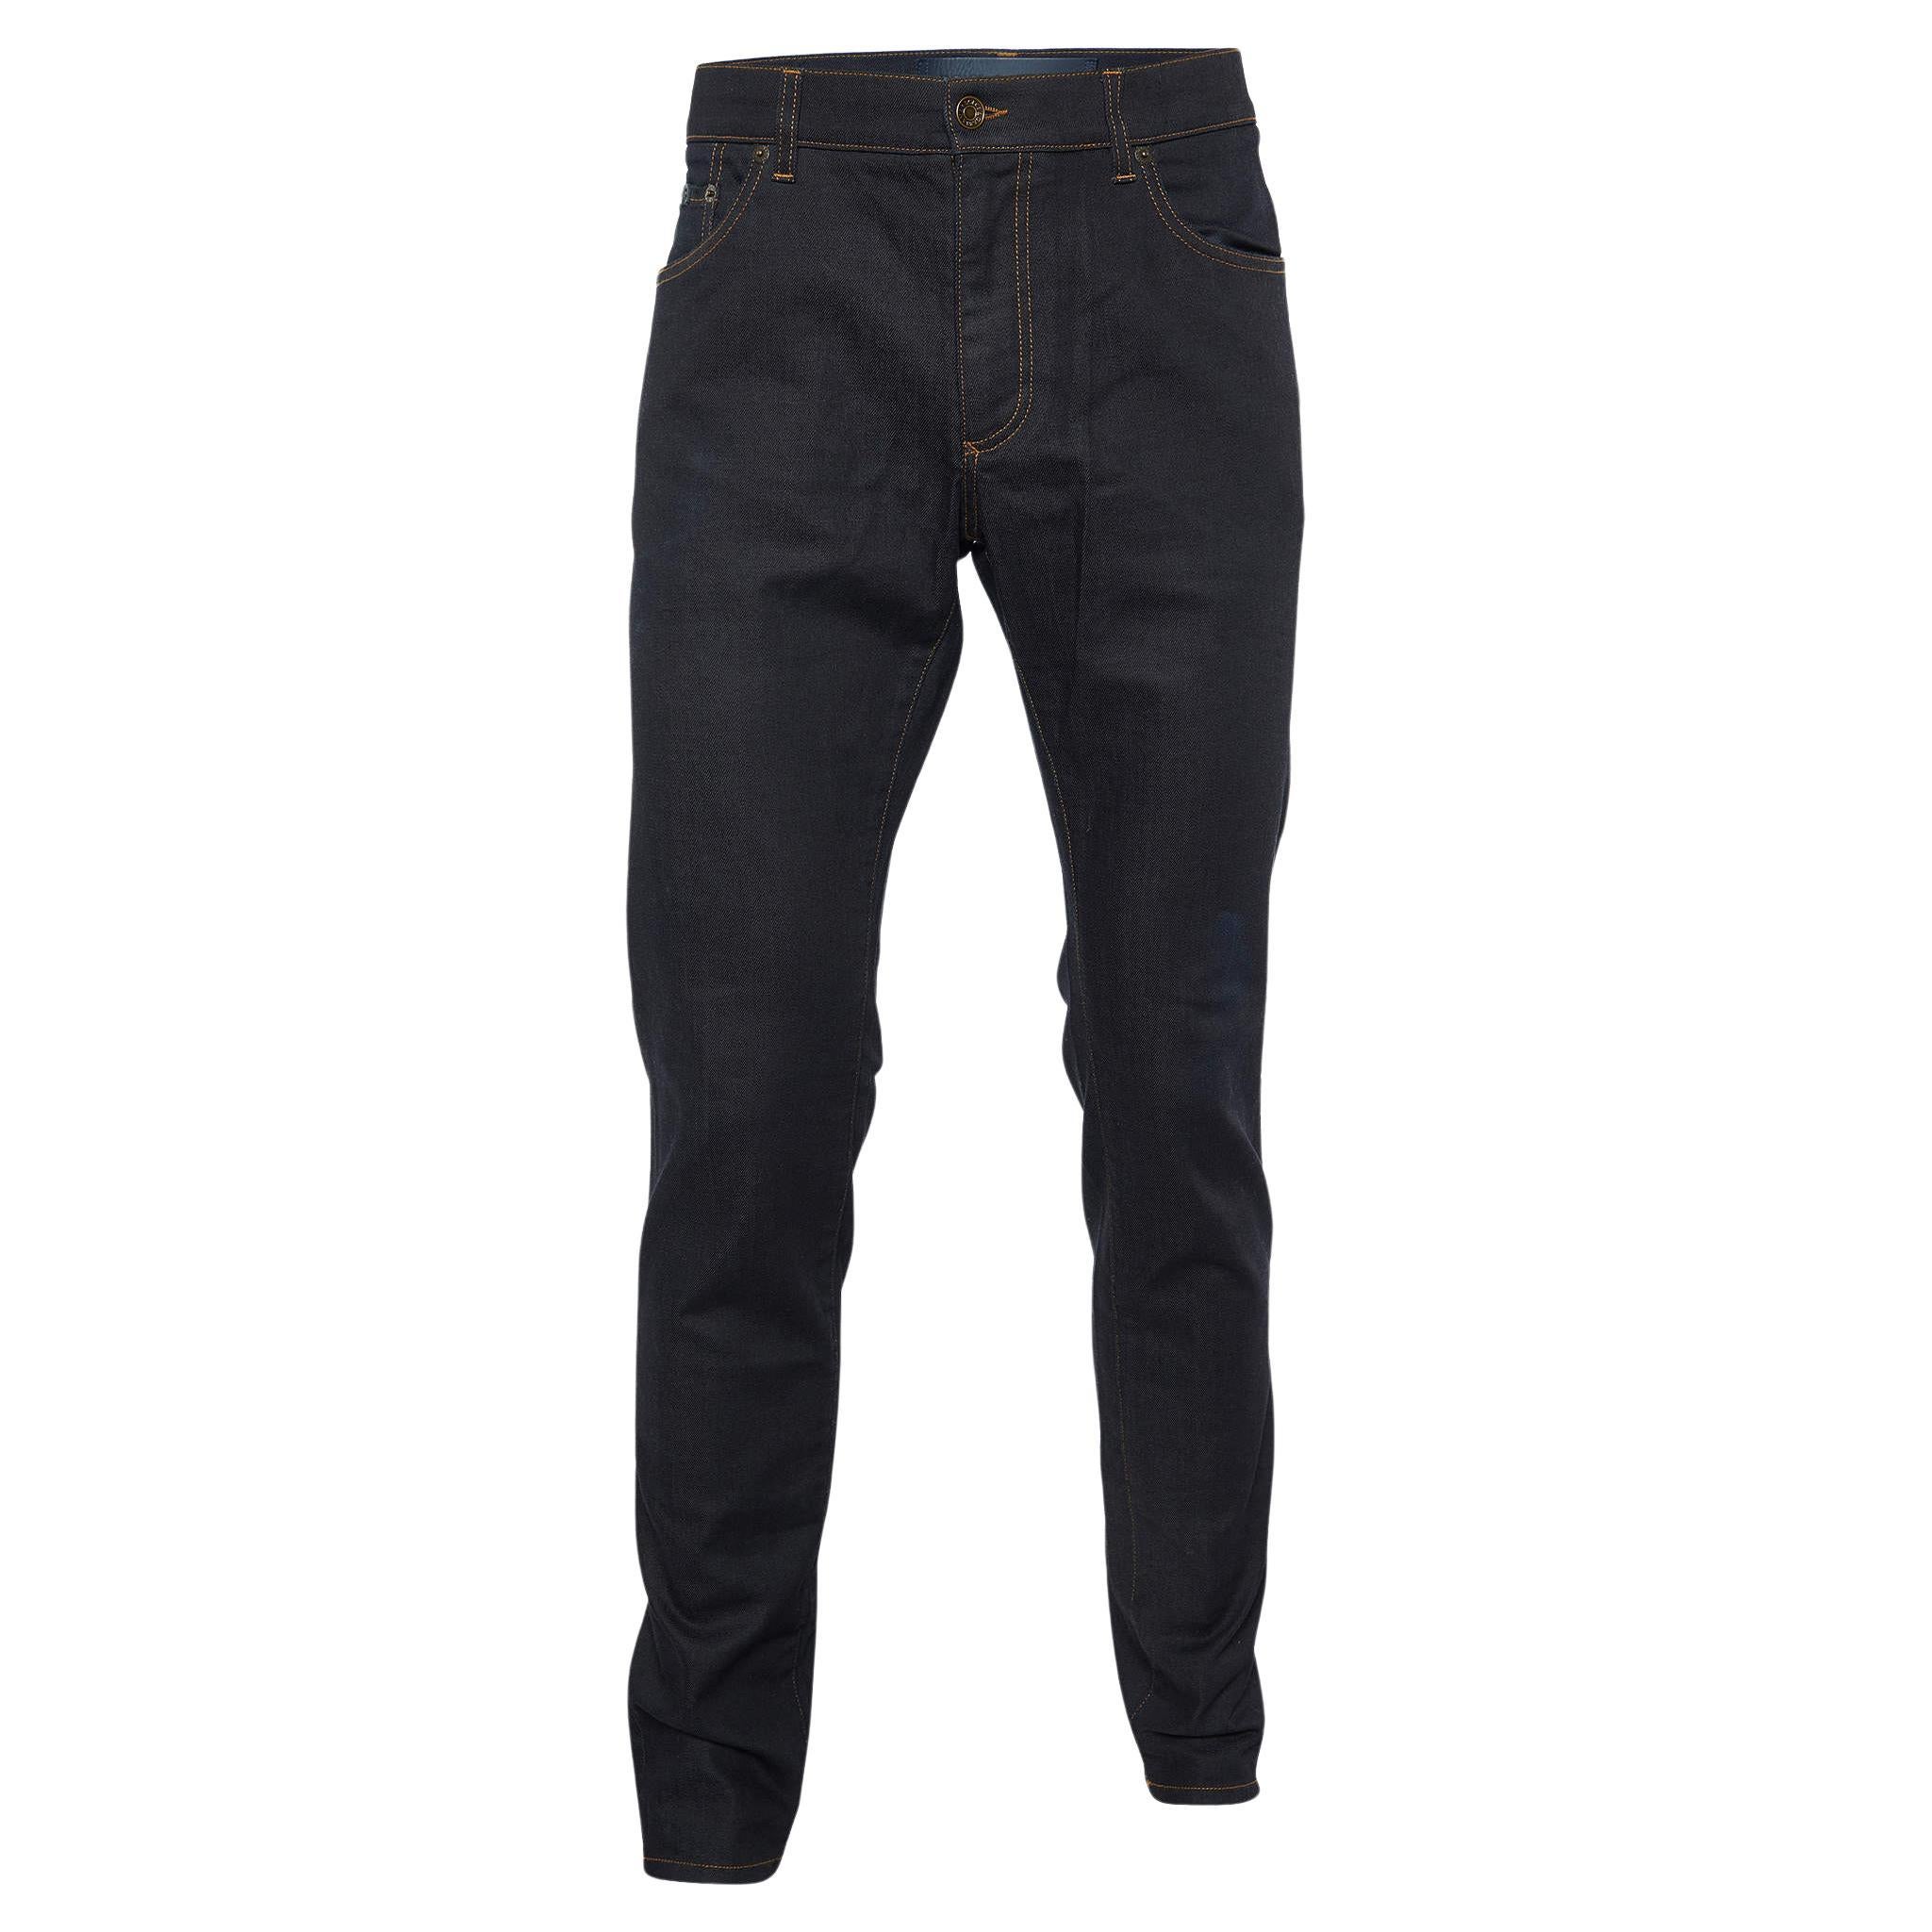 Dolce & Gabbana Black Denim 16 Stretch Slim Fit Jeans XL/Waist 36"